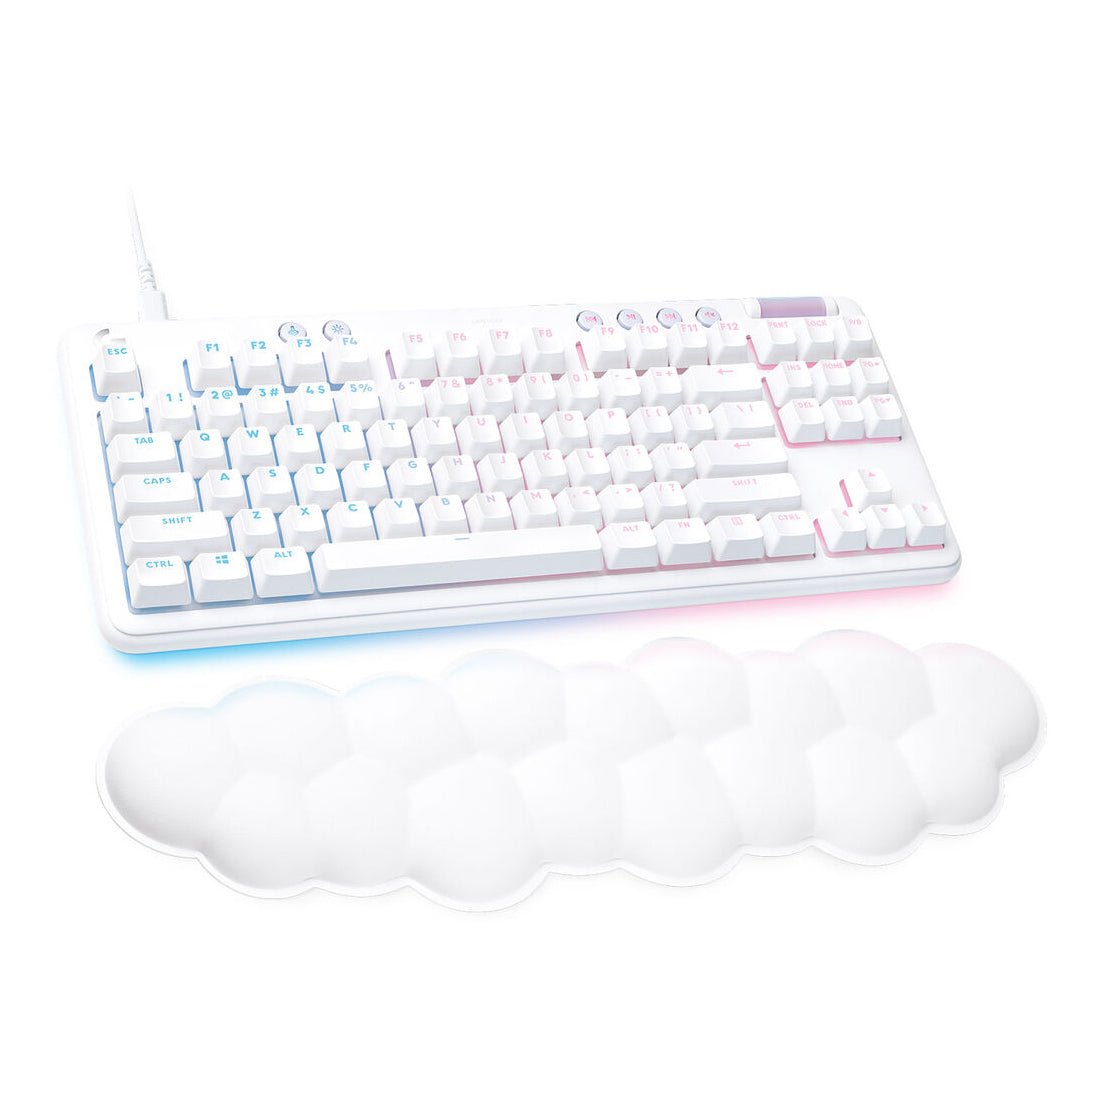 Logitech G713 TKL Wired Mechanical Gaming Keyboard - White Mist - Store 974 | ستور ٩٧٤